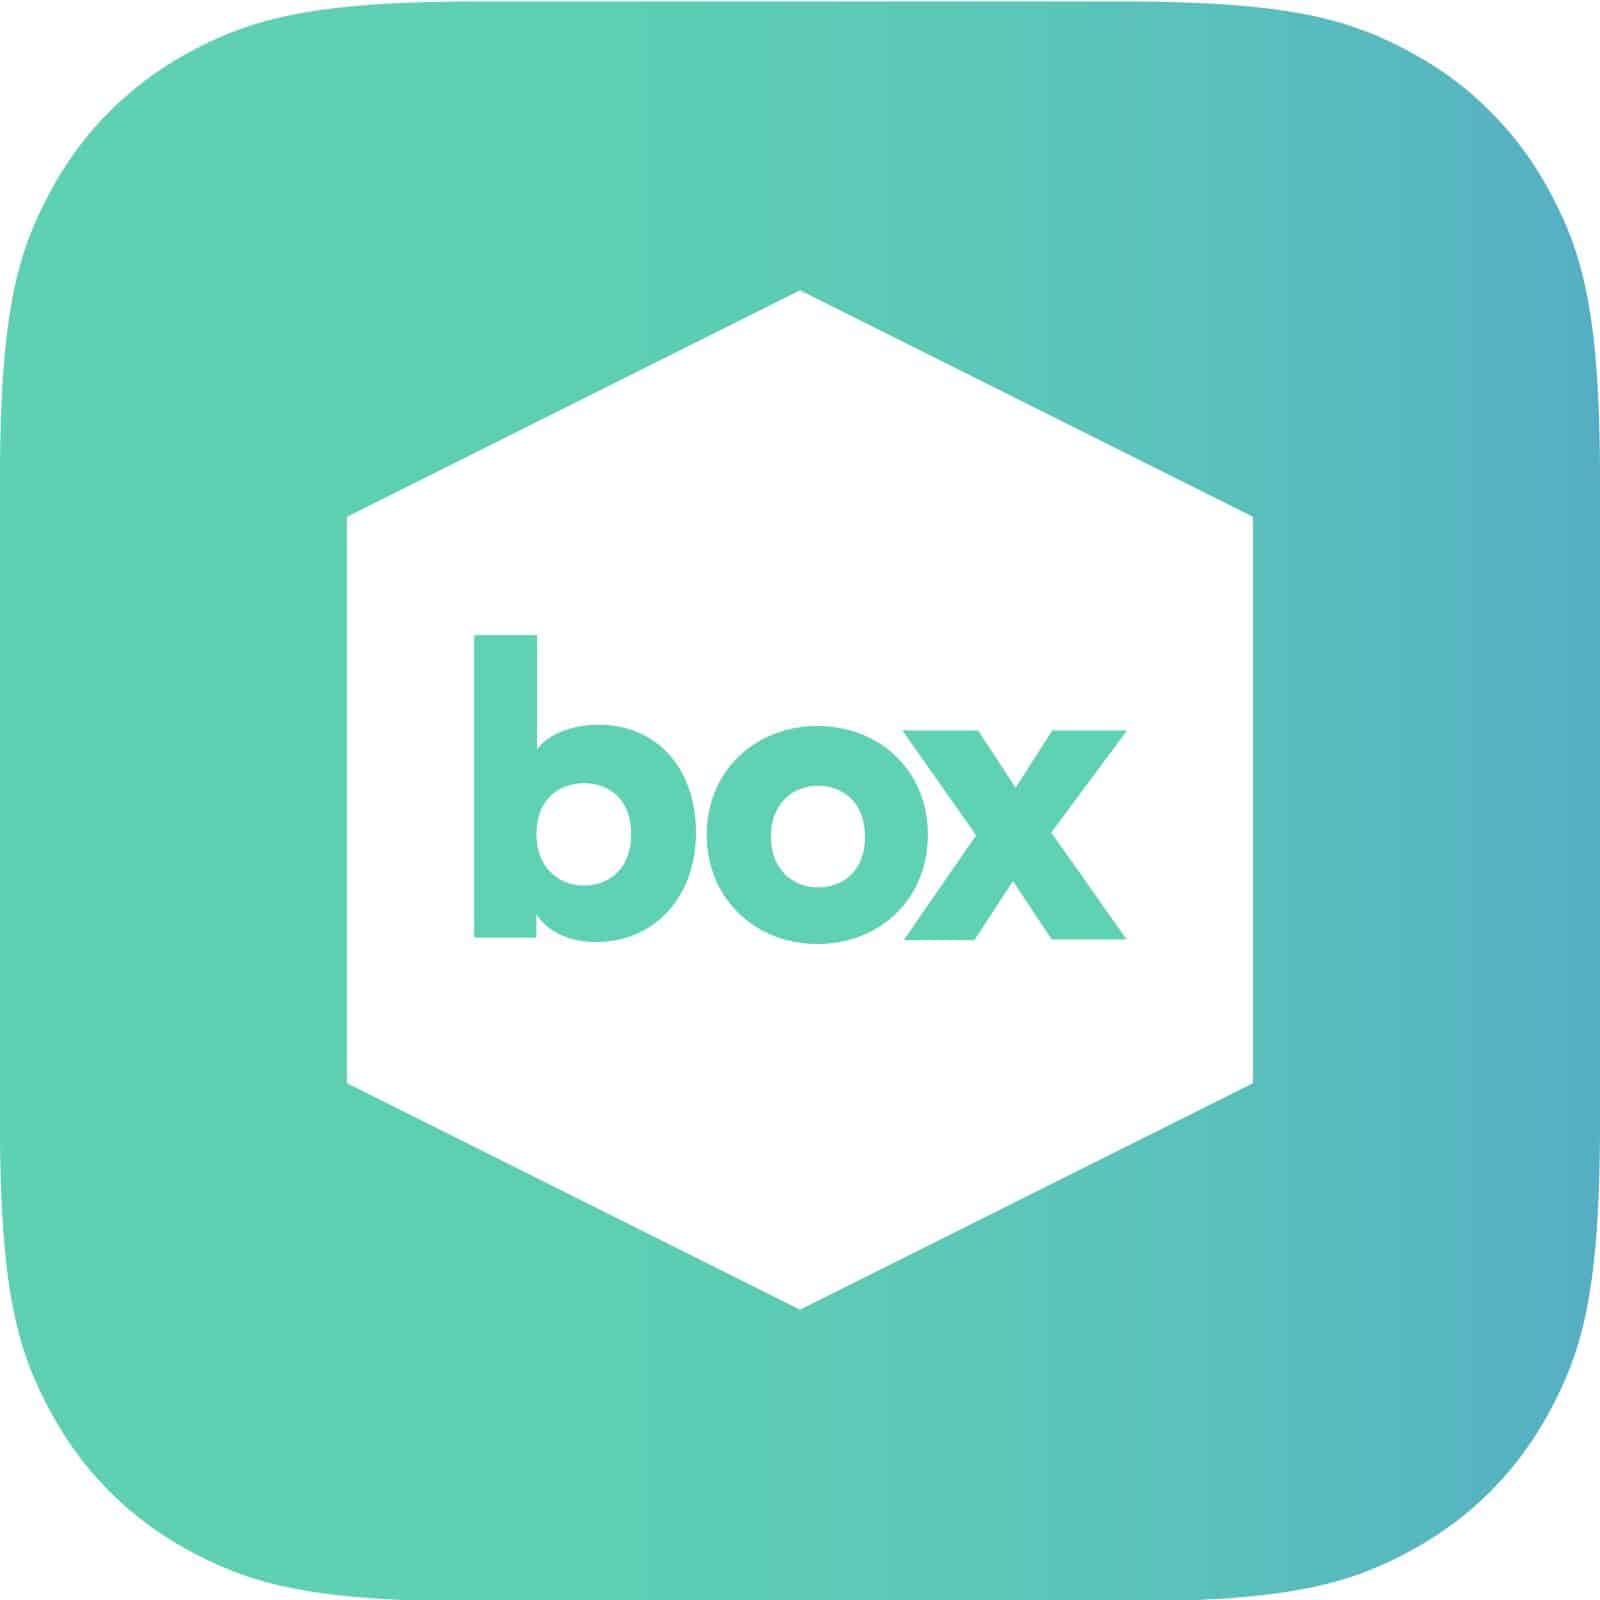 Boxwise logo icon